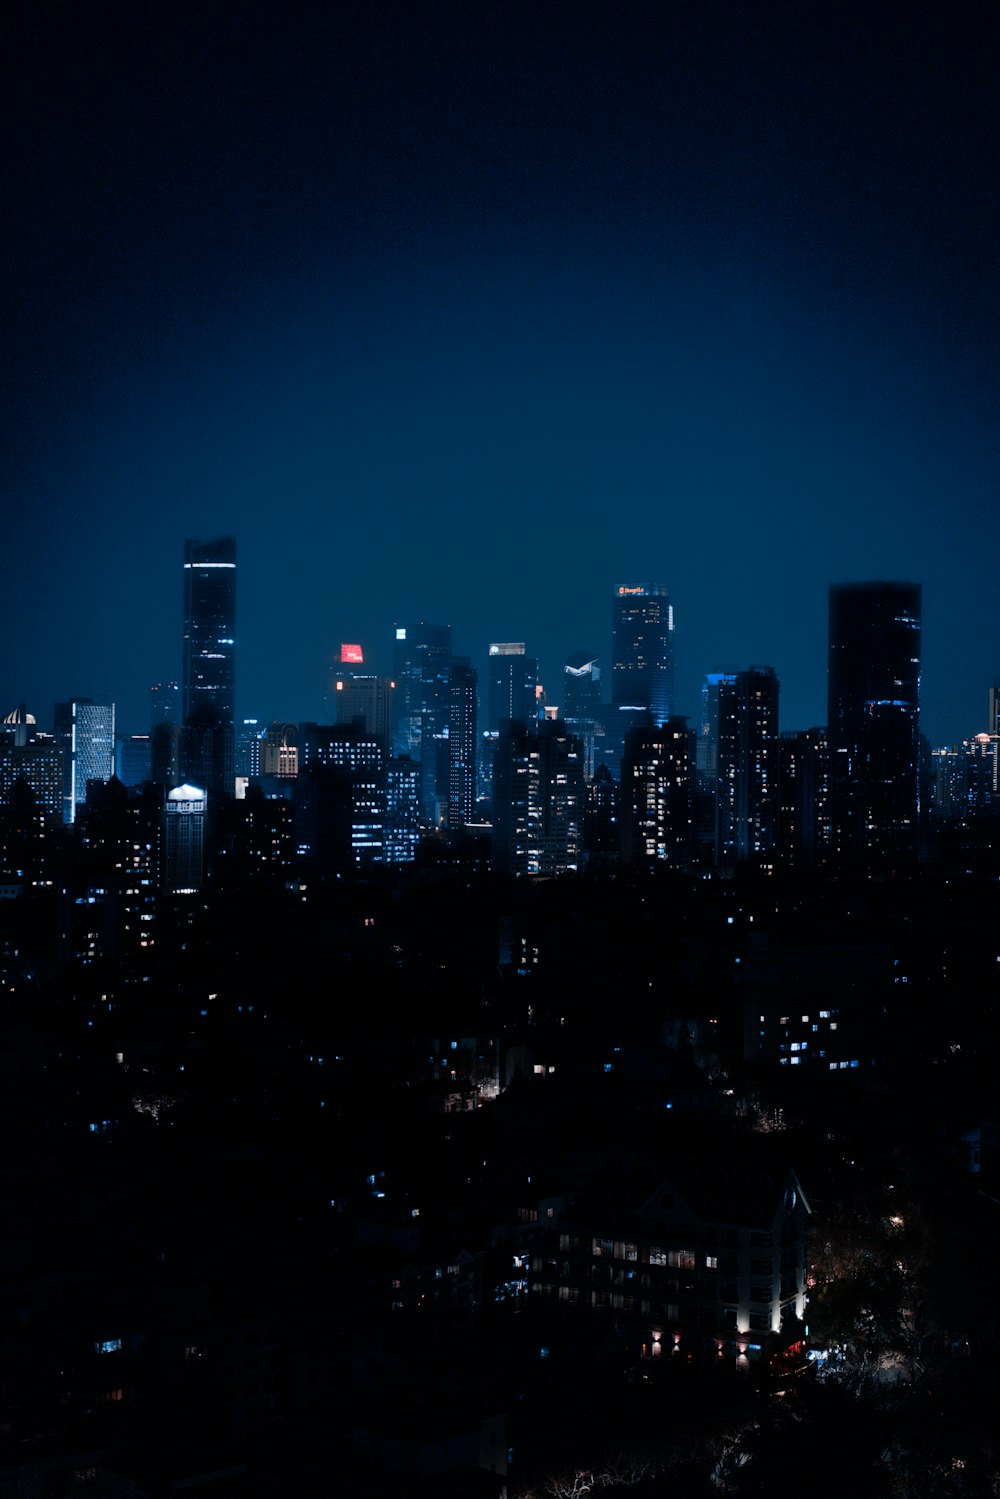 city skyline during night time photo – Free Blue Image on Unsplash